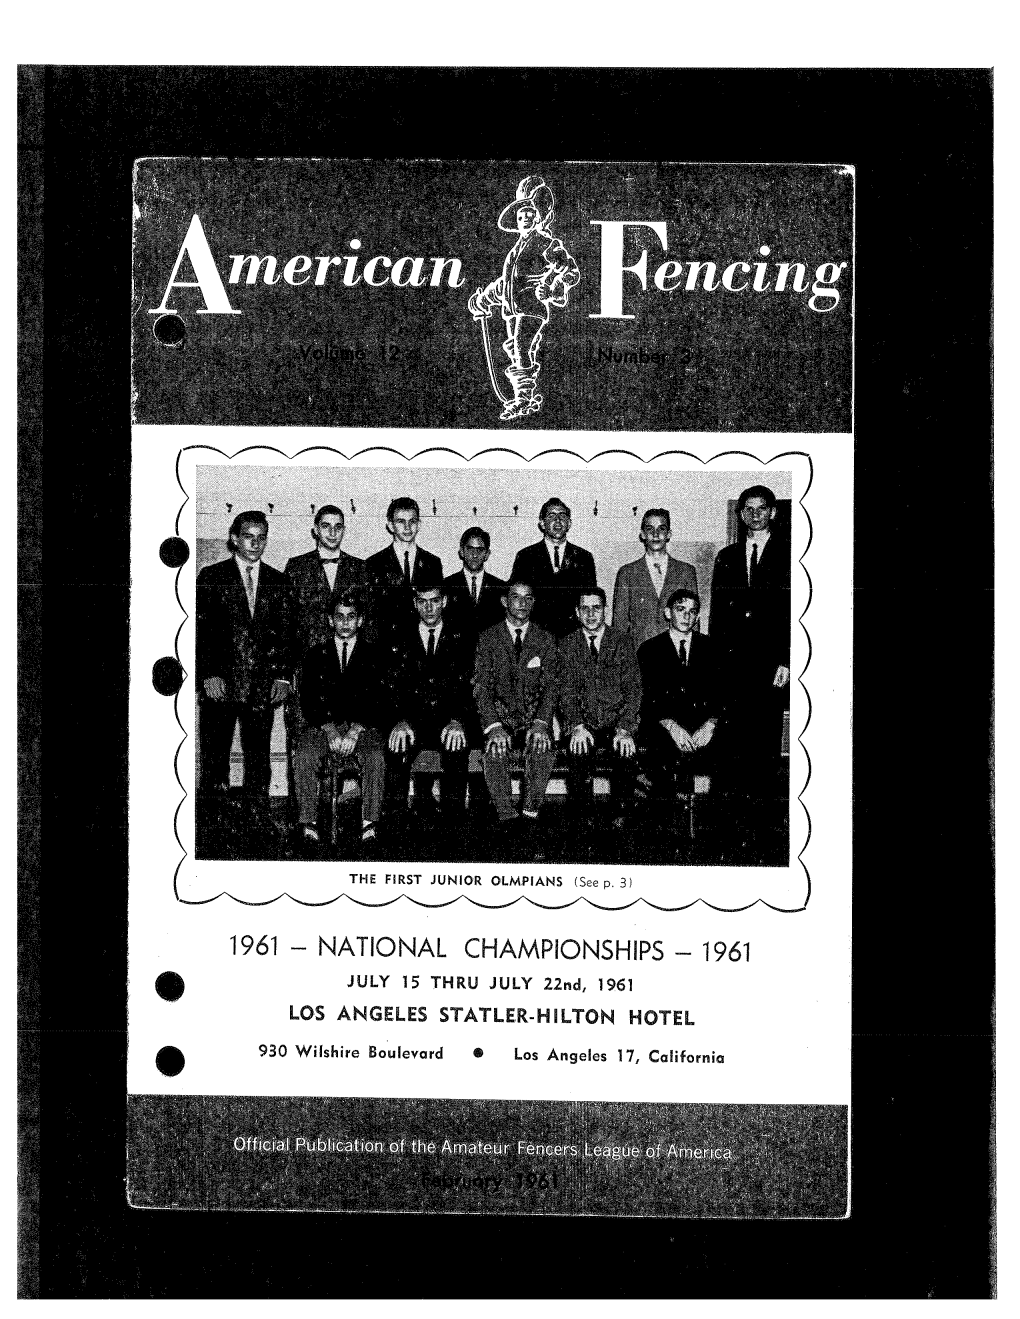 1961 - National Championships - 1961